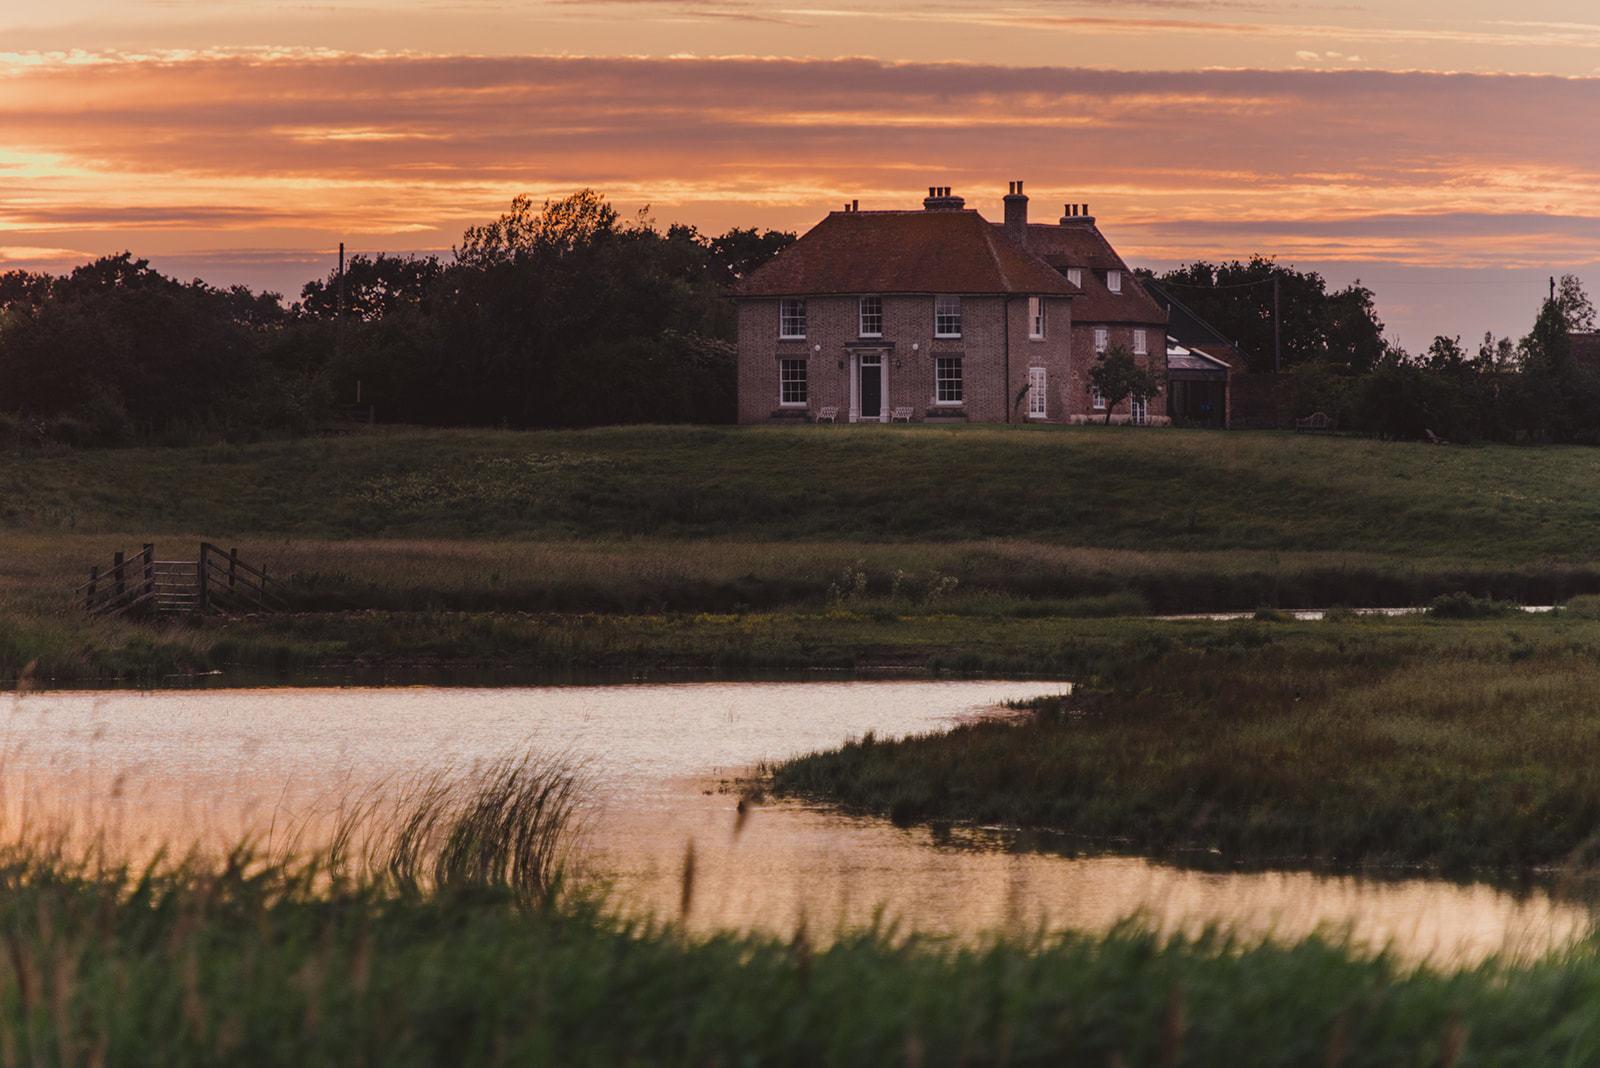 Kingshill Farmhouse sunrise over the marshes